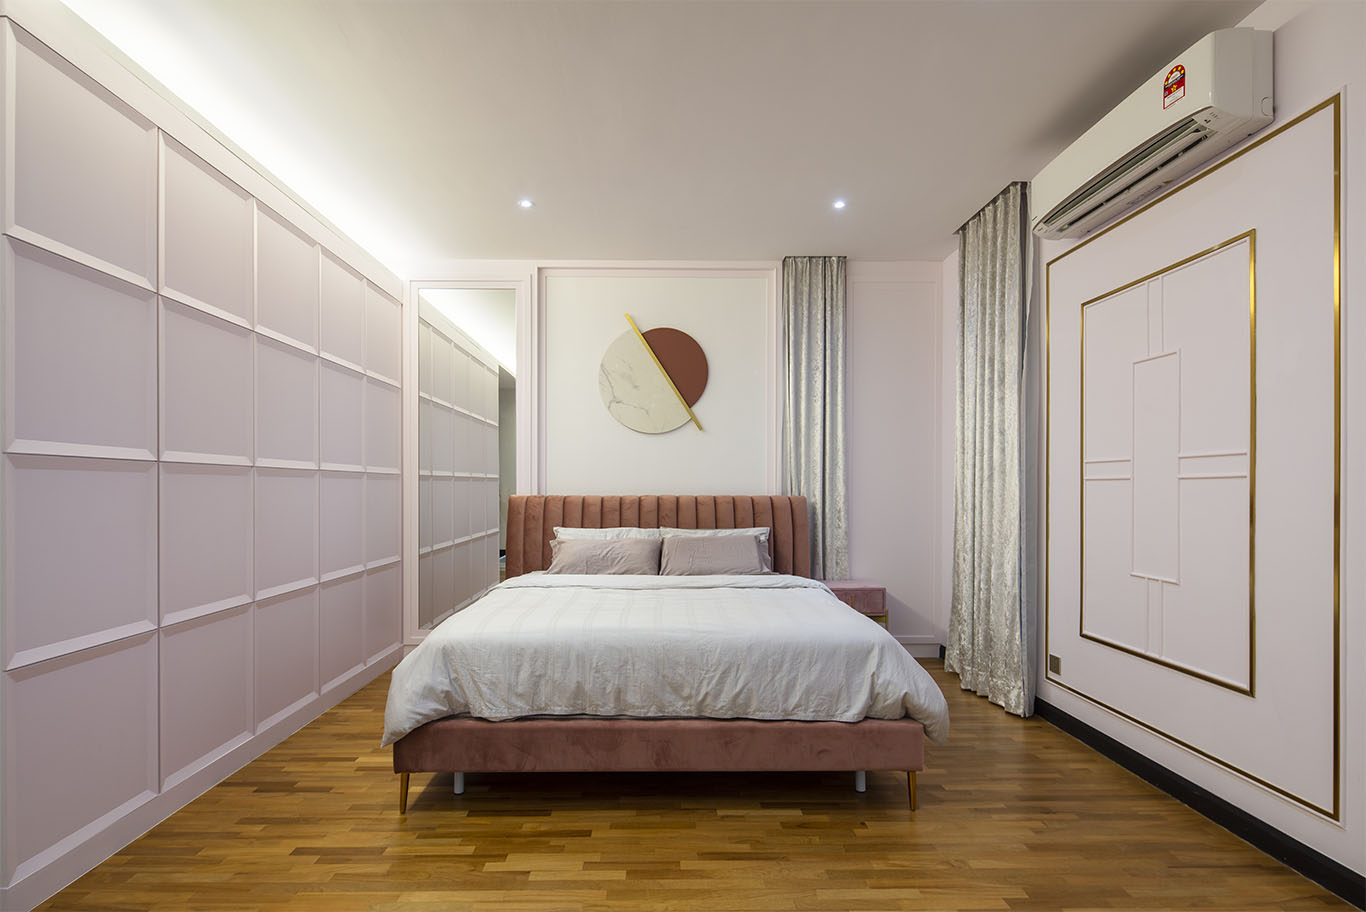 MIEUX La Famillie De Lee modern bedroom design with hidden curtain and wooden floor mieux interior design